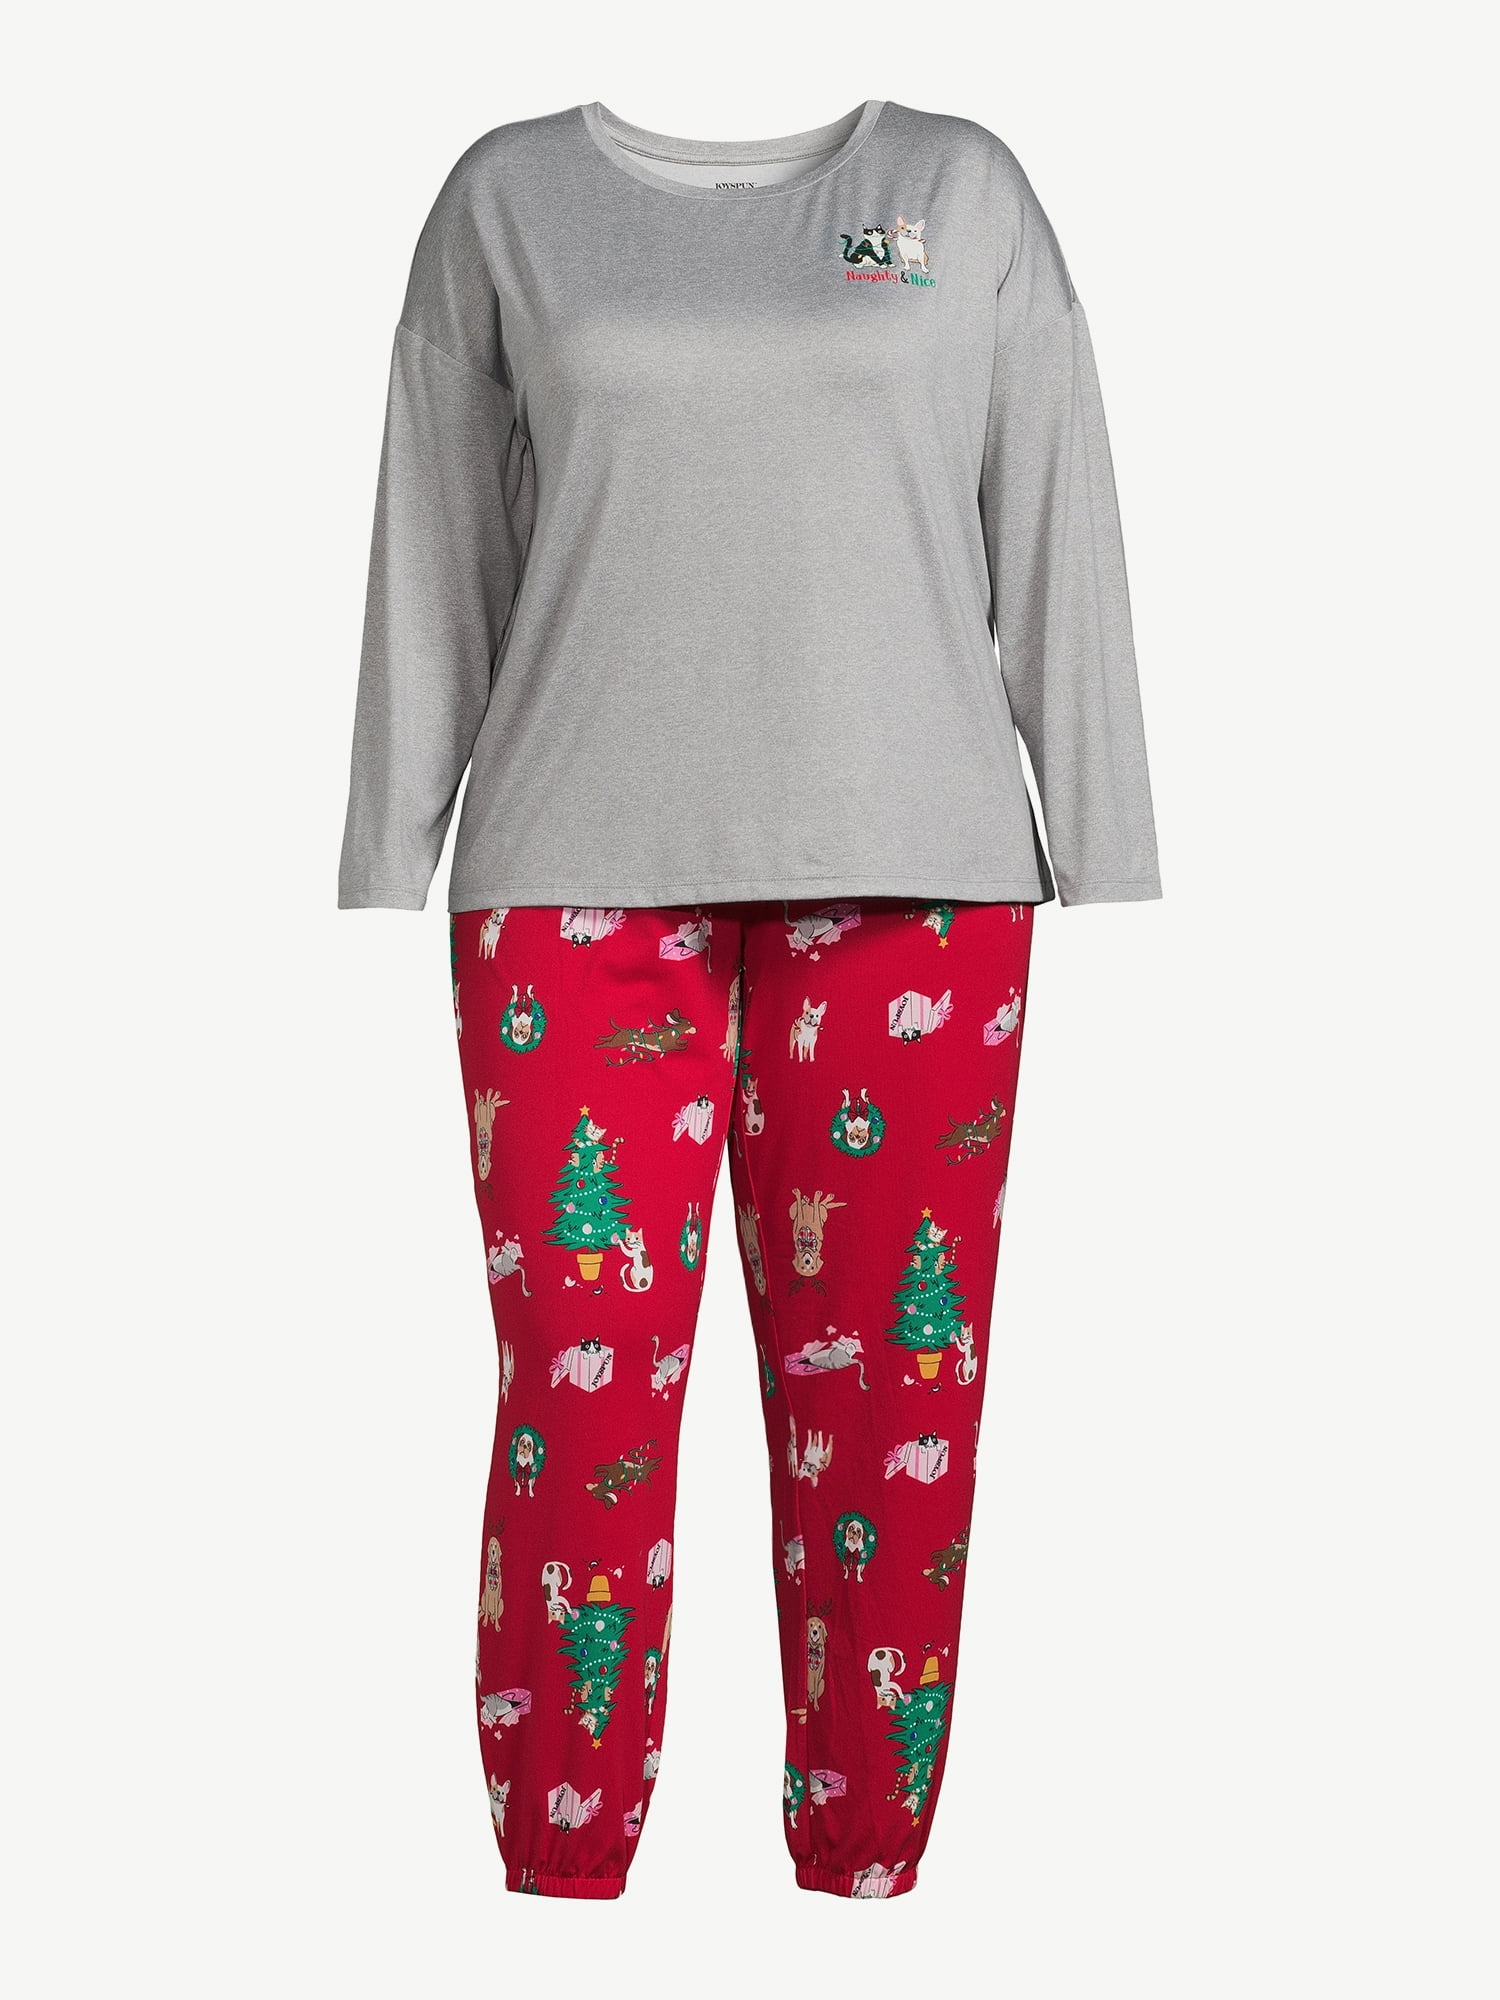 Joyshaper Womens Cotton Pajama Set Long Sleeve Tops Jogger Pants with  Pockets Loungewear Sets(Gray Stars-M) 